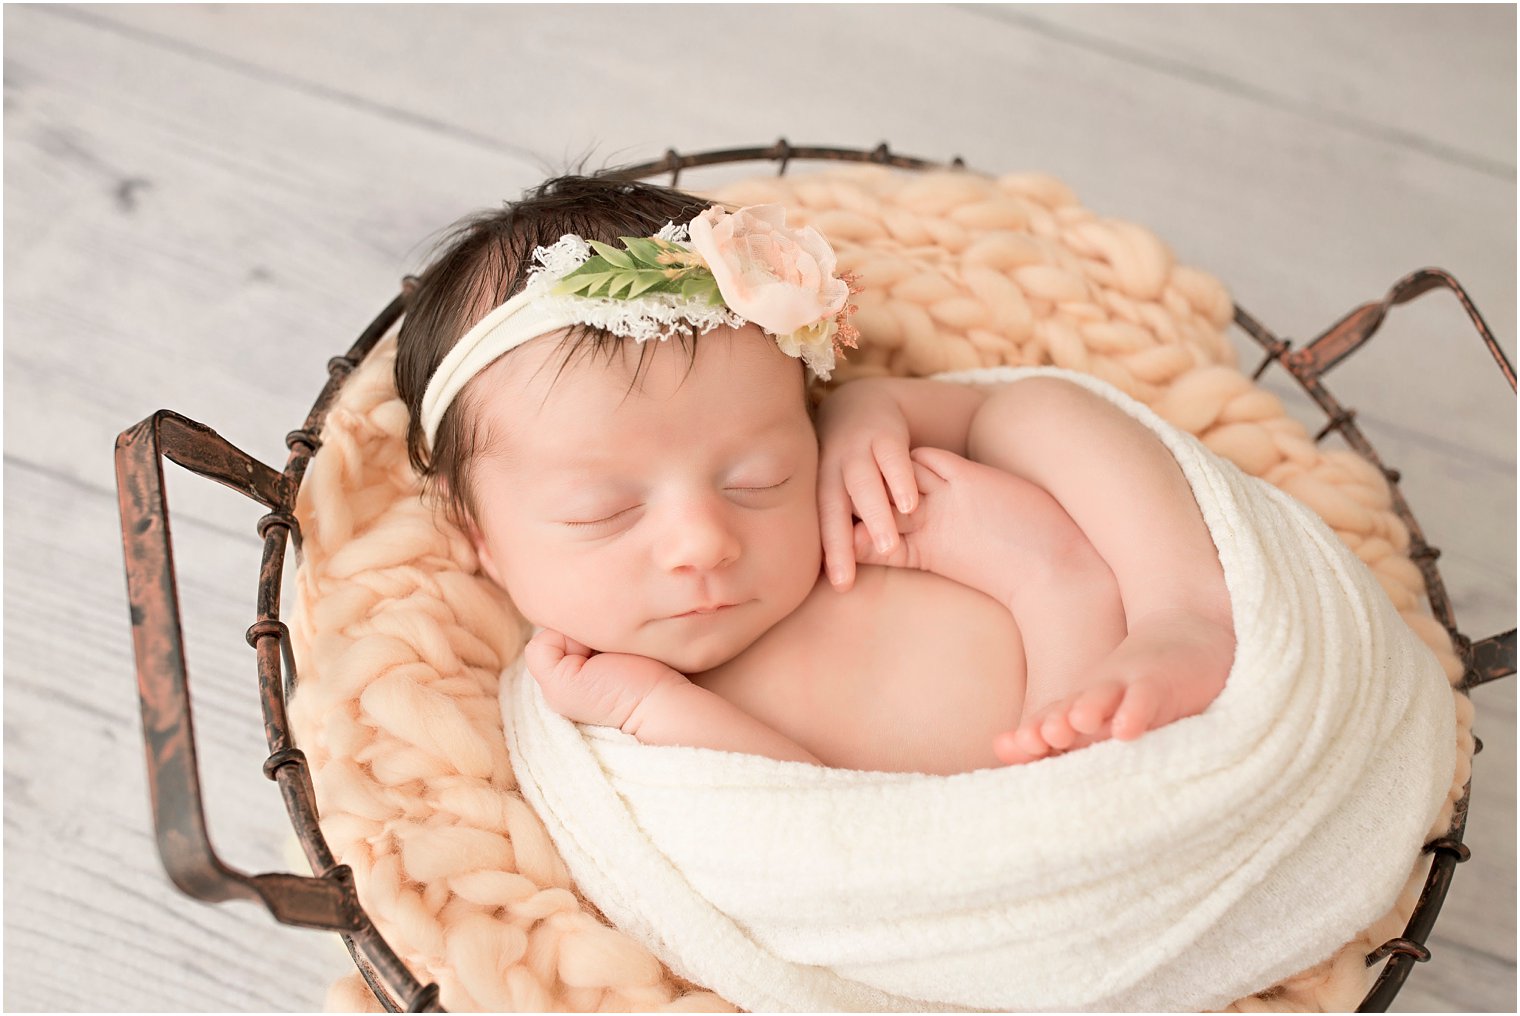 Sleepy newborn photo | Photo by Idalia Photography